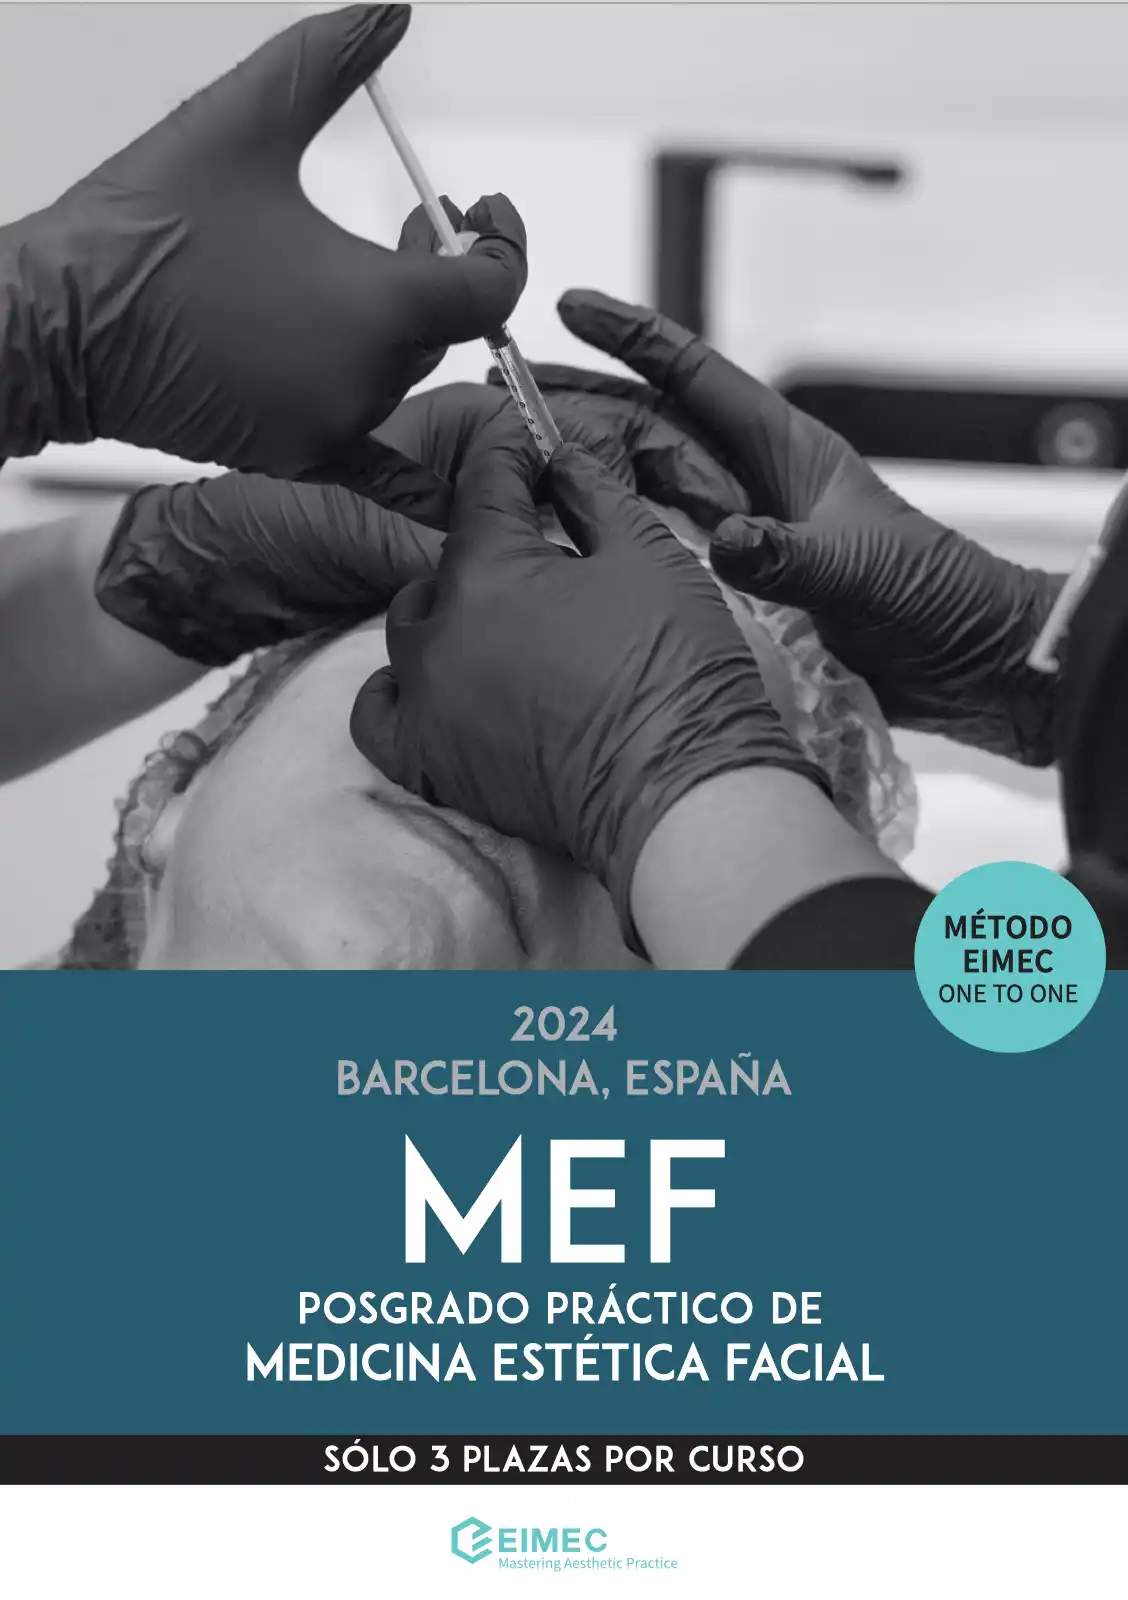 MEF curso posgrado practico medicina estetica facial EIMEC barcelona